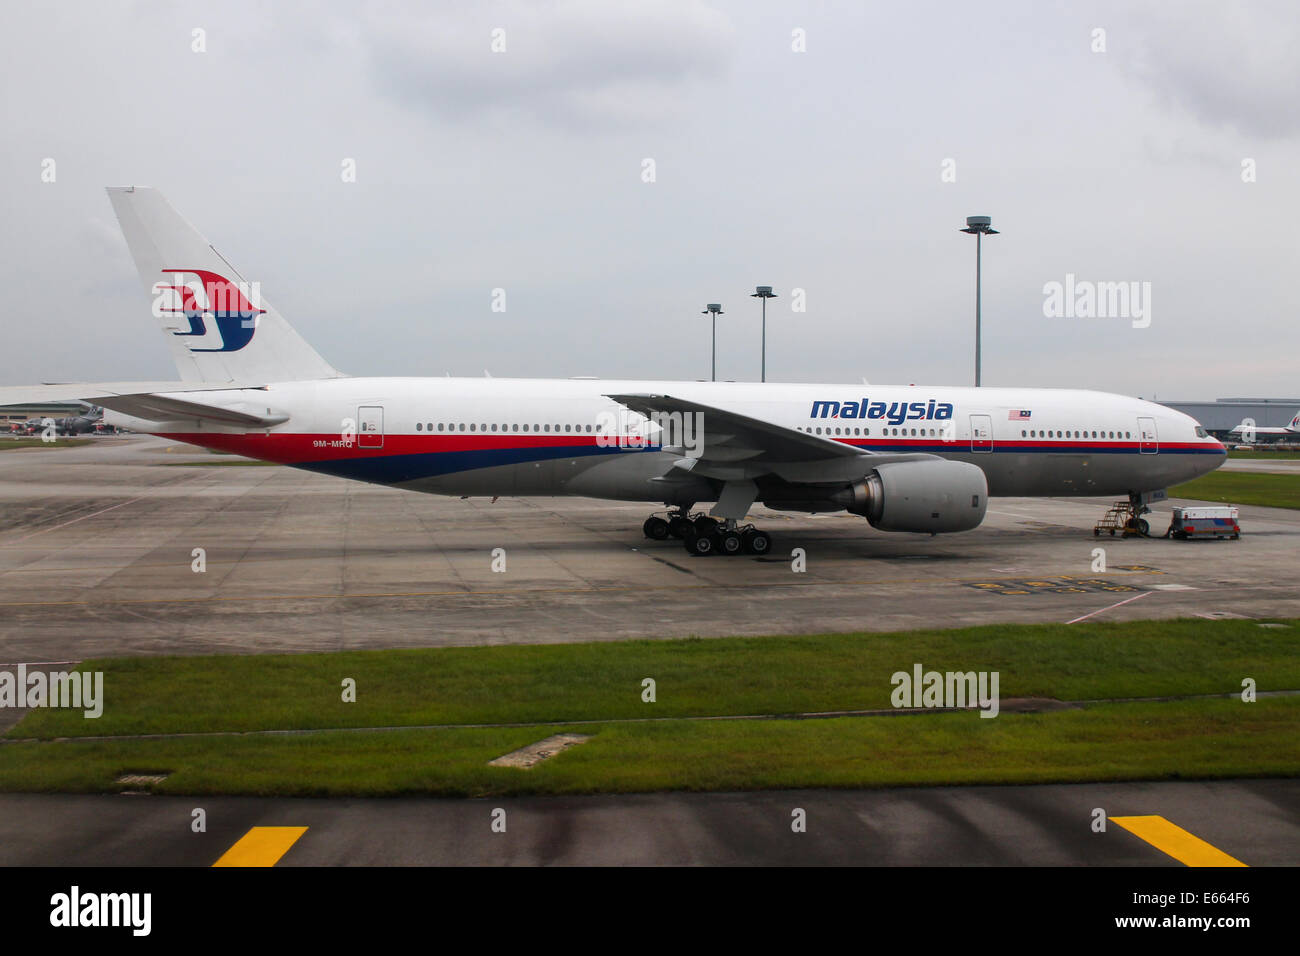 Malaysia Airlines Boeing 777-200 seen stored at Kuala Lumpur International airport Stock Photo